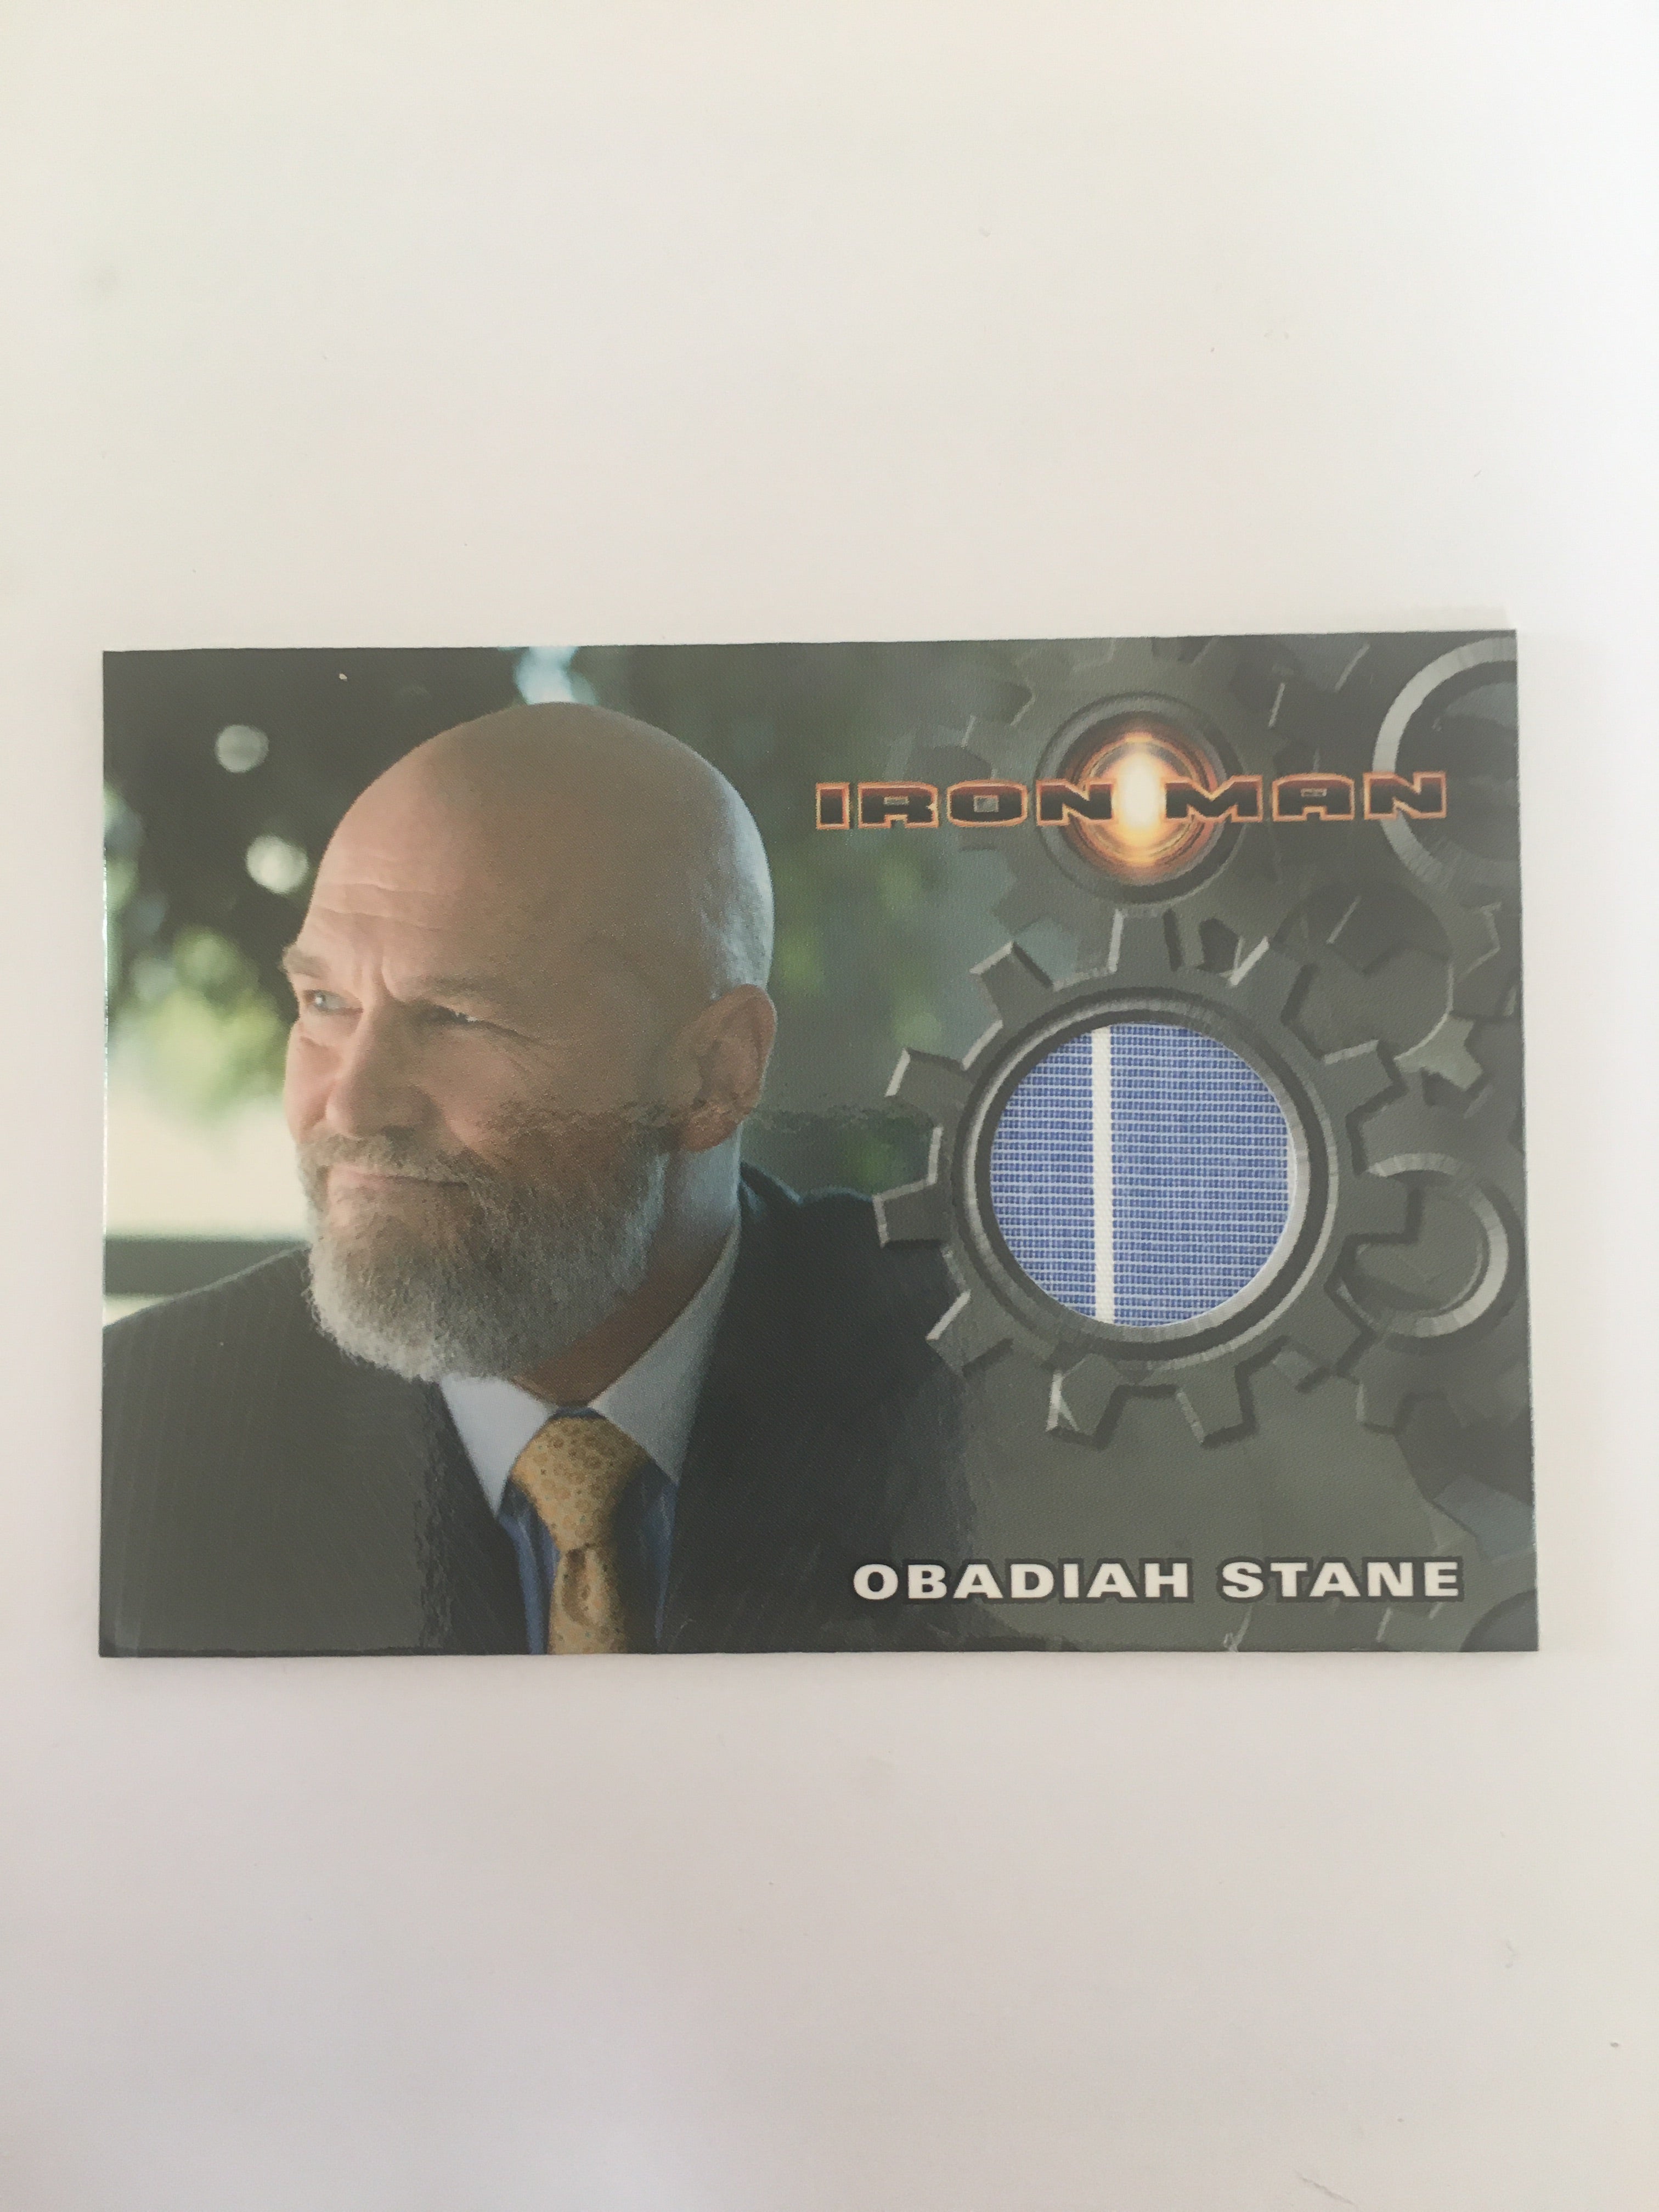 IRON MAN COSTUME (OBADIAH STANE) - Limited & Rare Trading Card